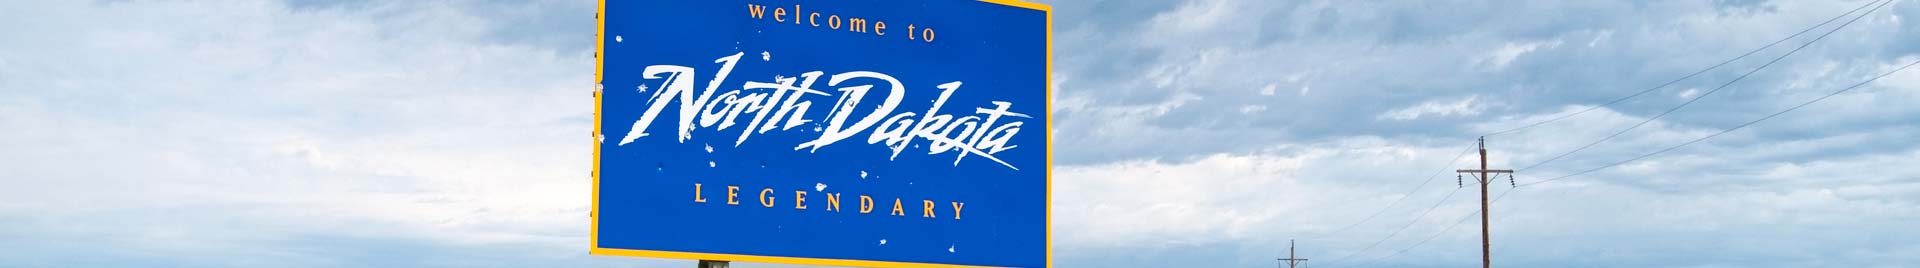 Independent Claims Adjuster Services - North Dakota